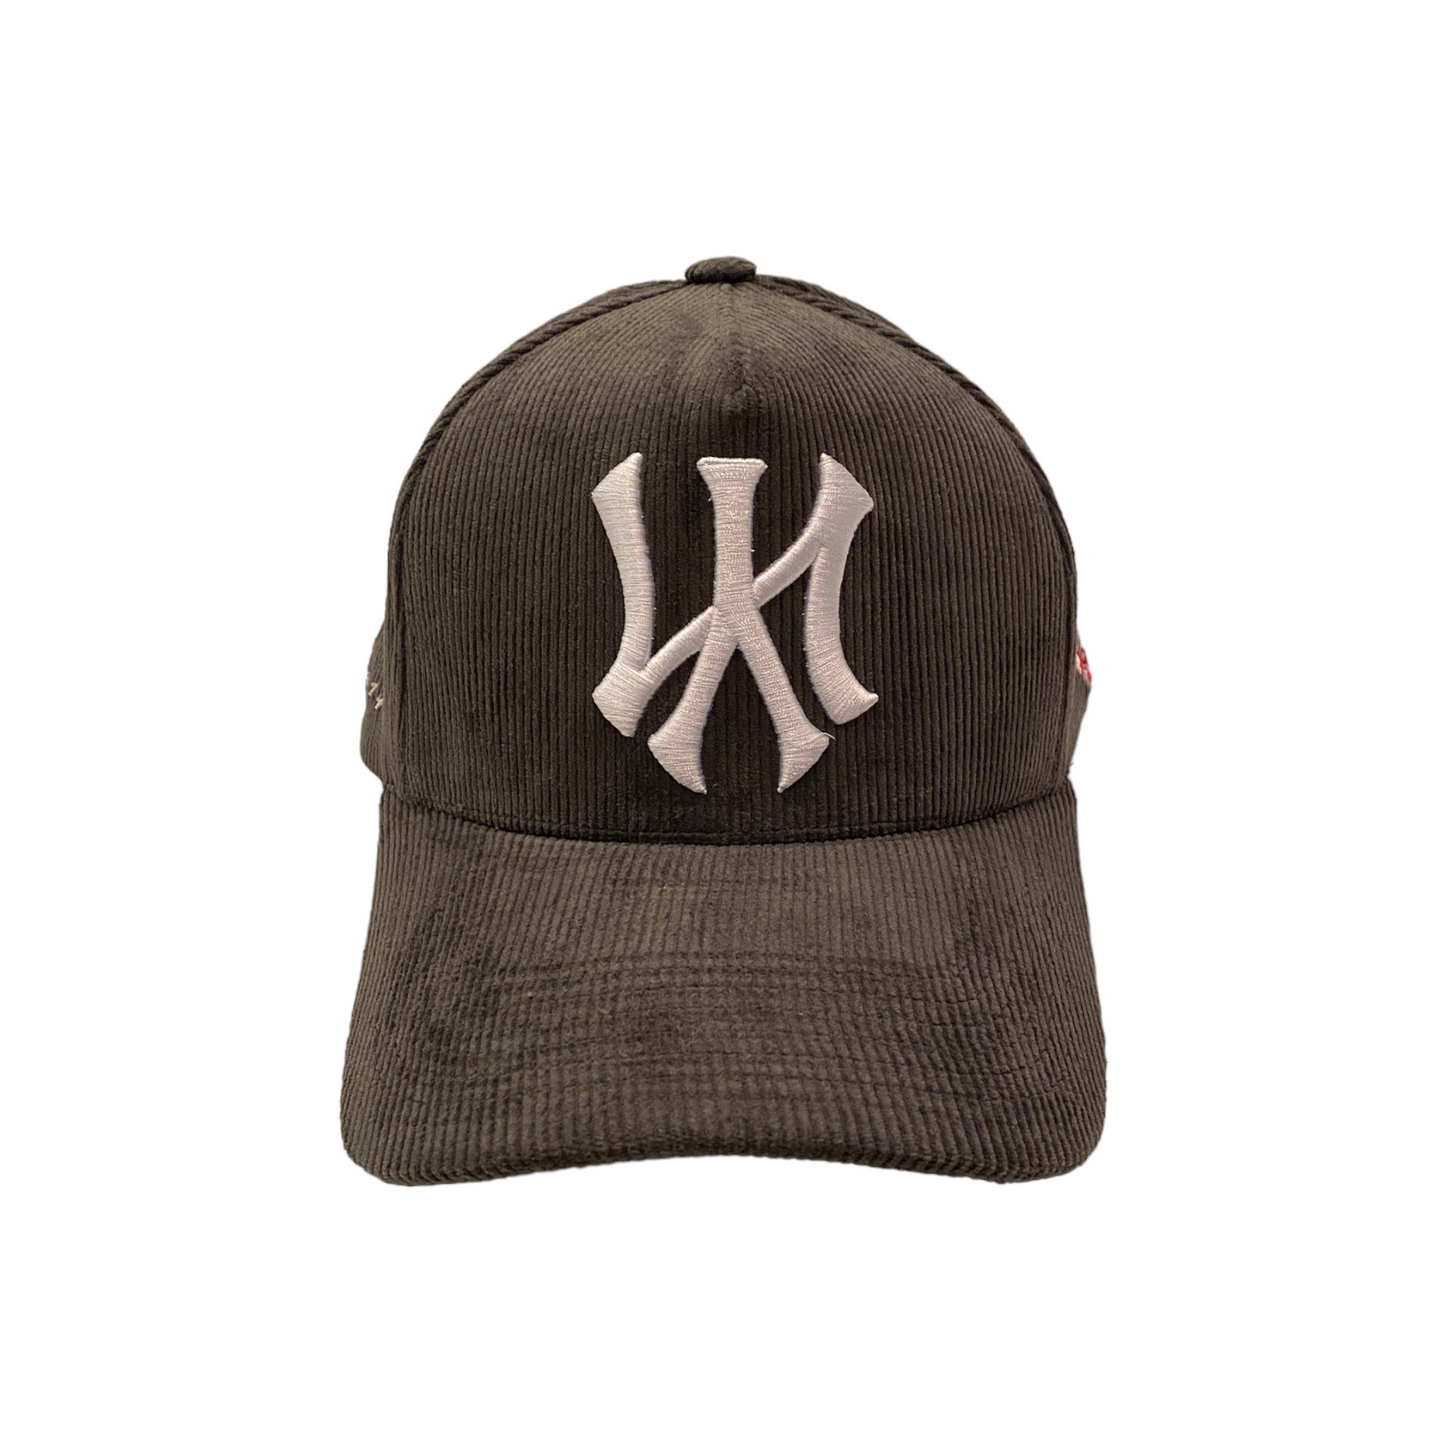 NY Legends Hat *Corduroy*